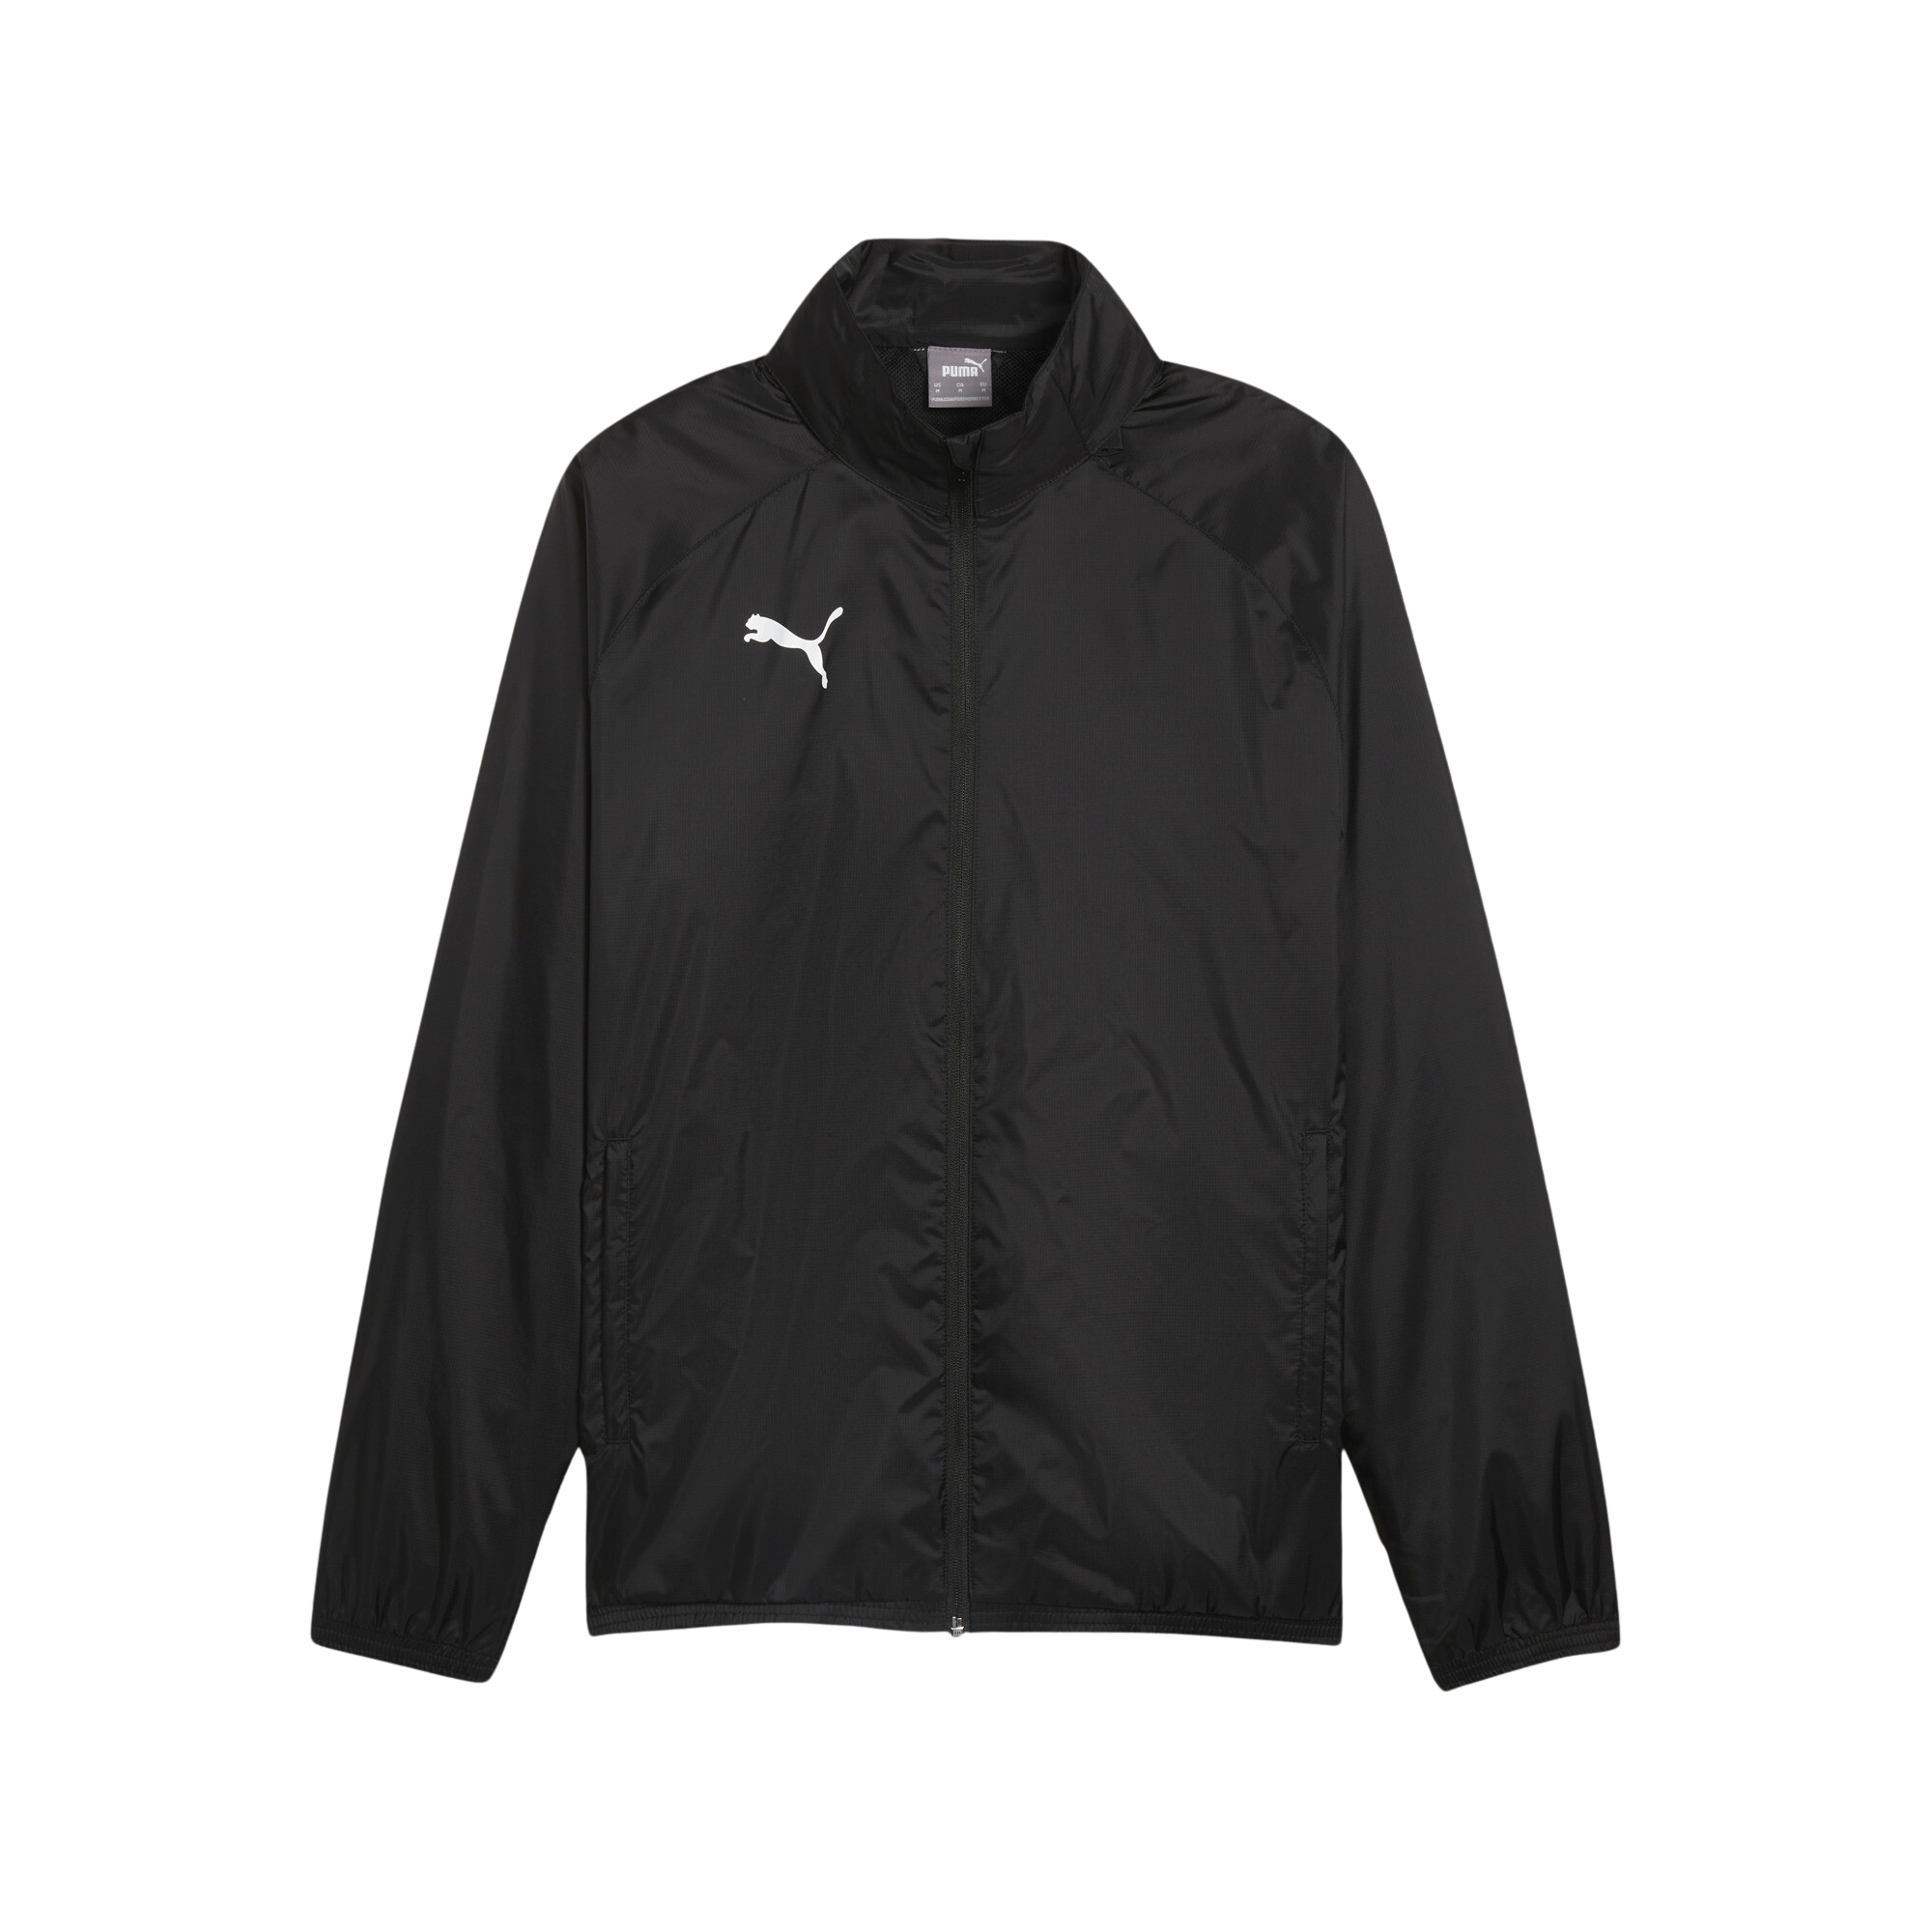 TeamGOAL all weather jacket SR - 659038-03 